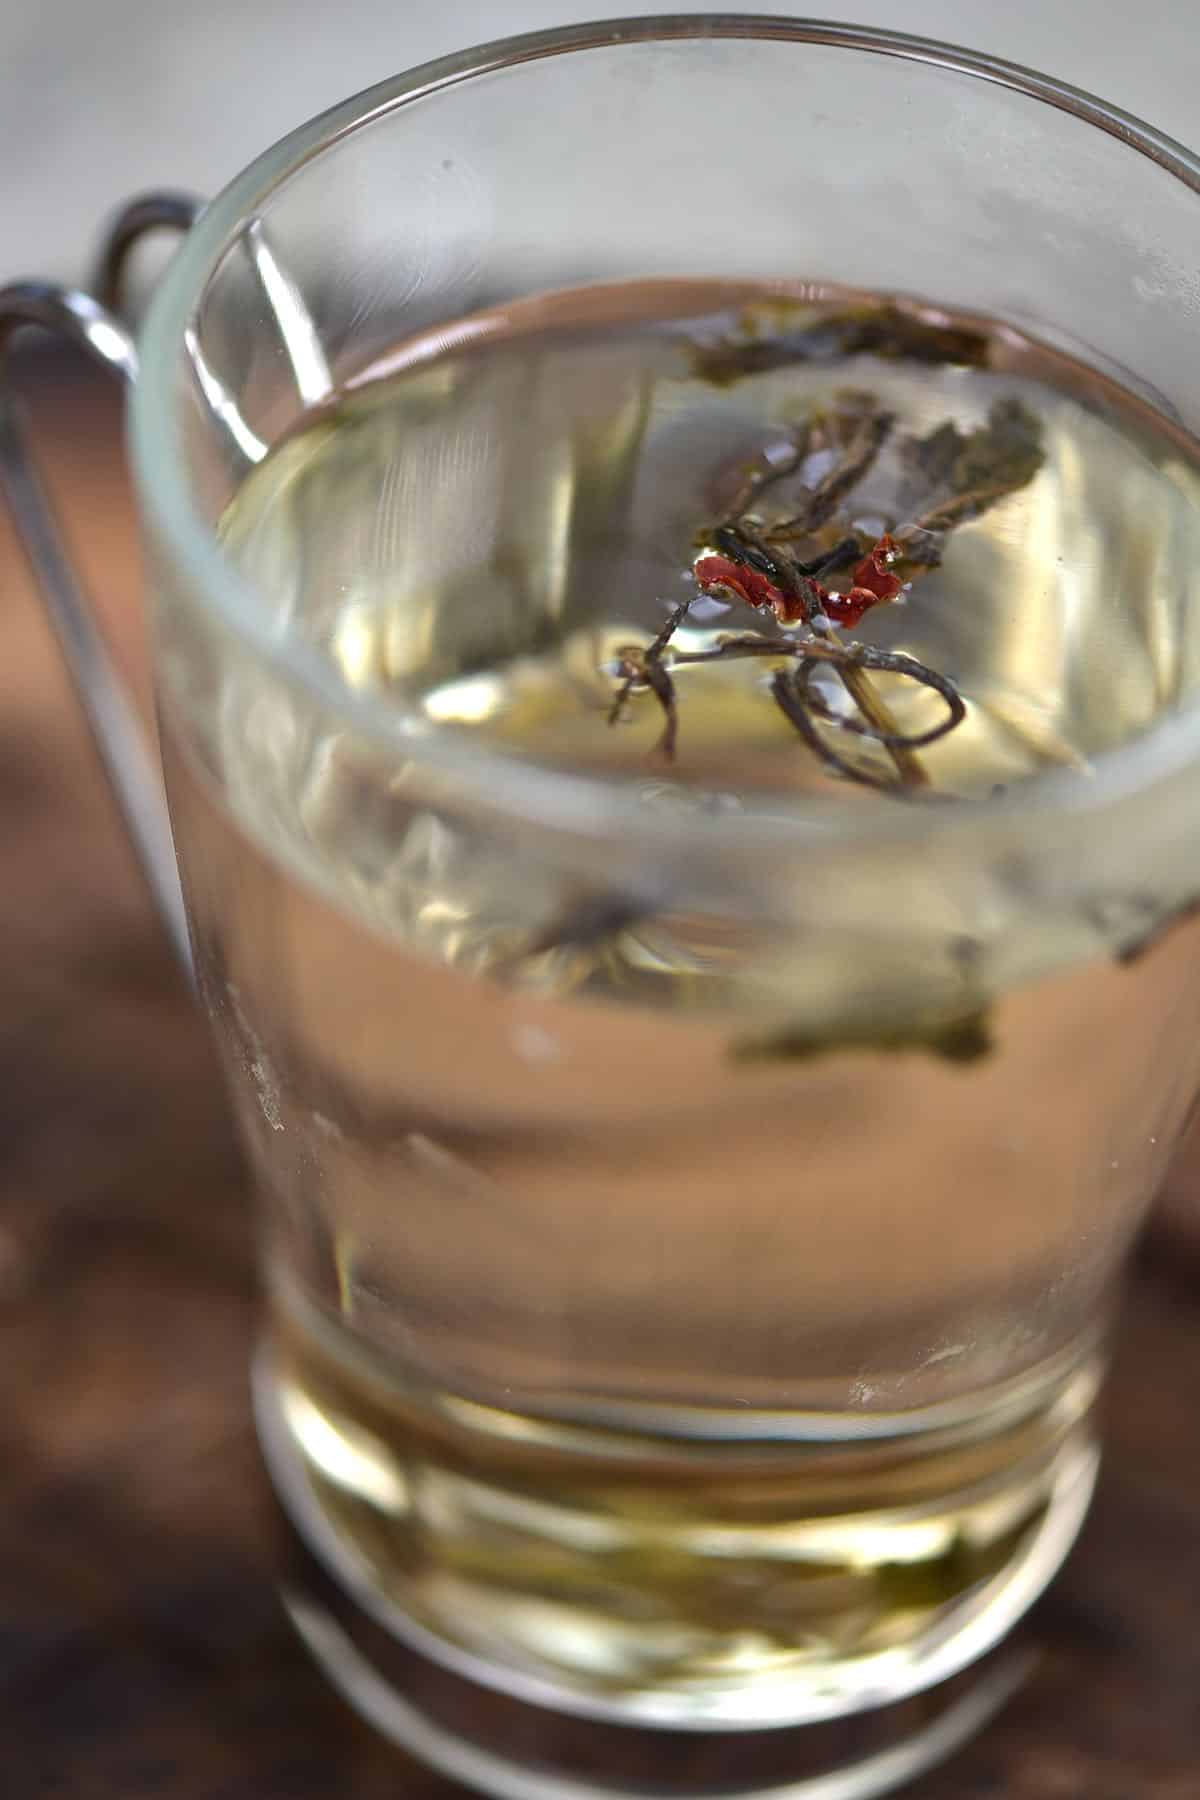 Steeping tea in a tall glass